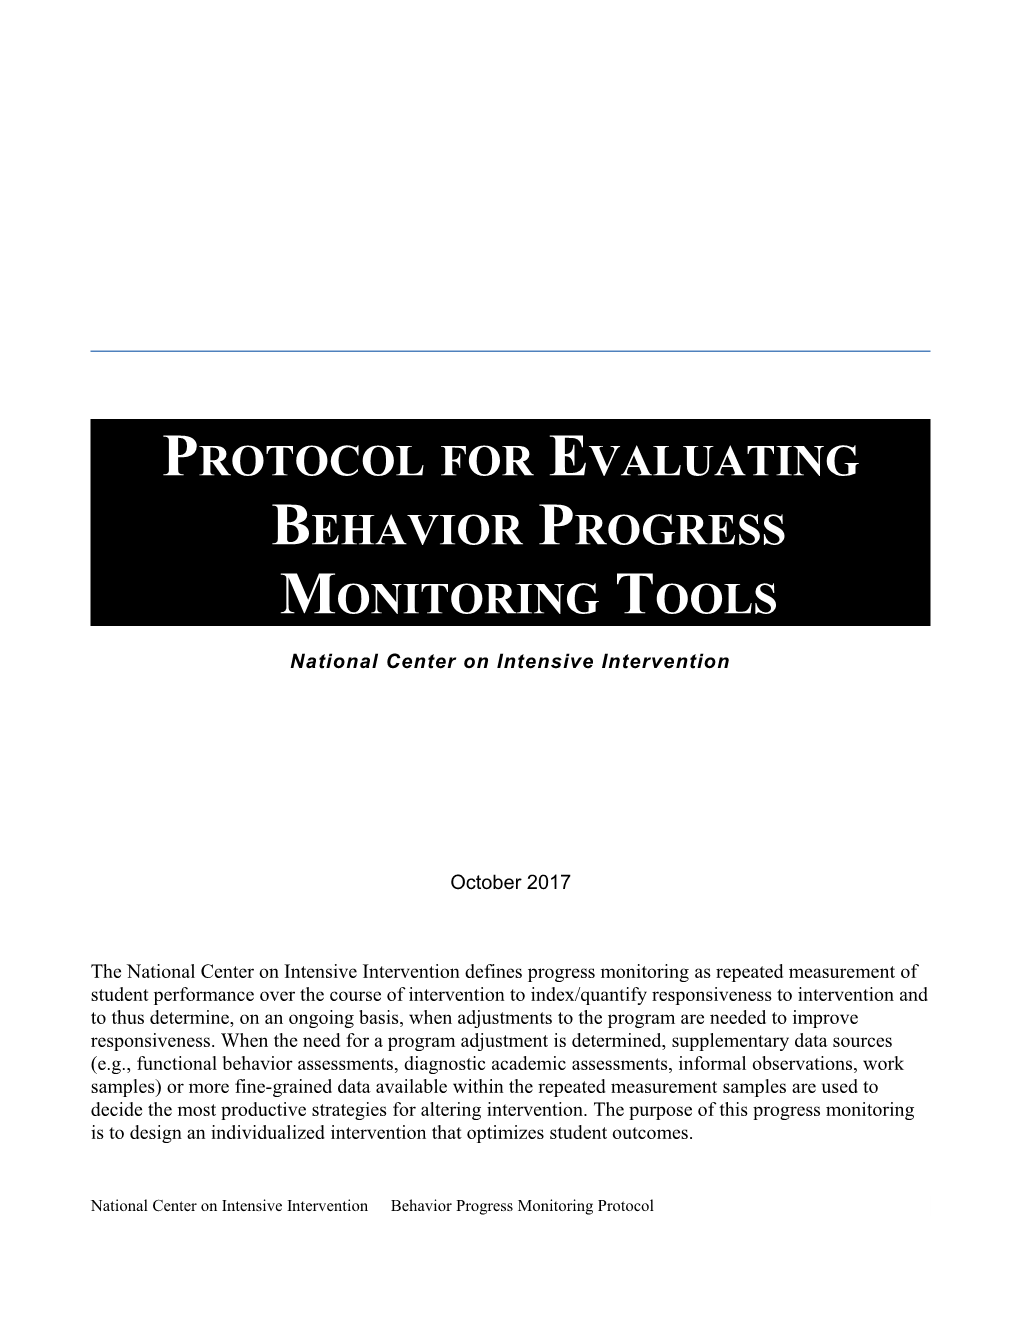 Protocol for Evaluating Behavior Progress Monitoring Tools